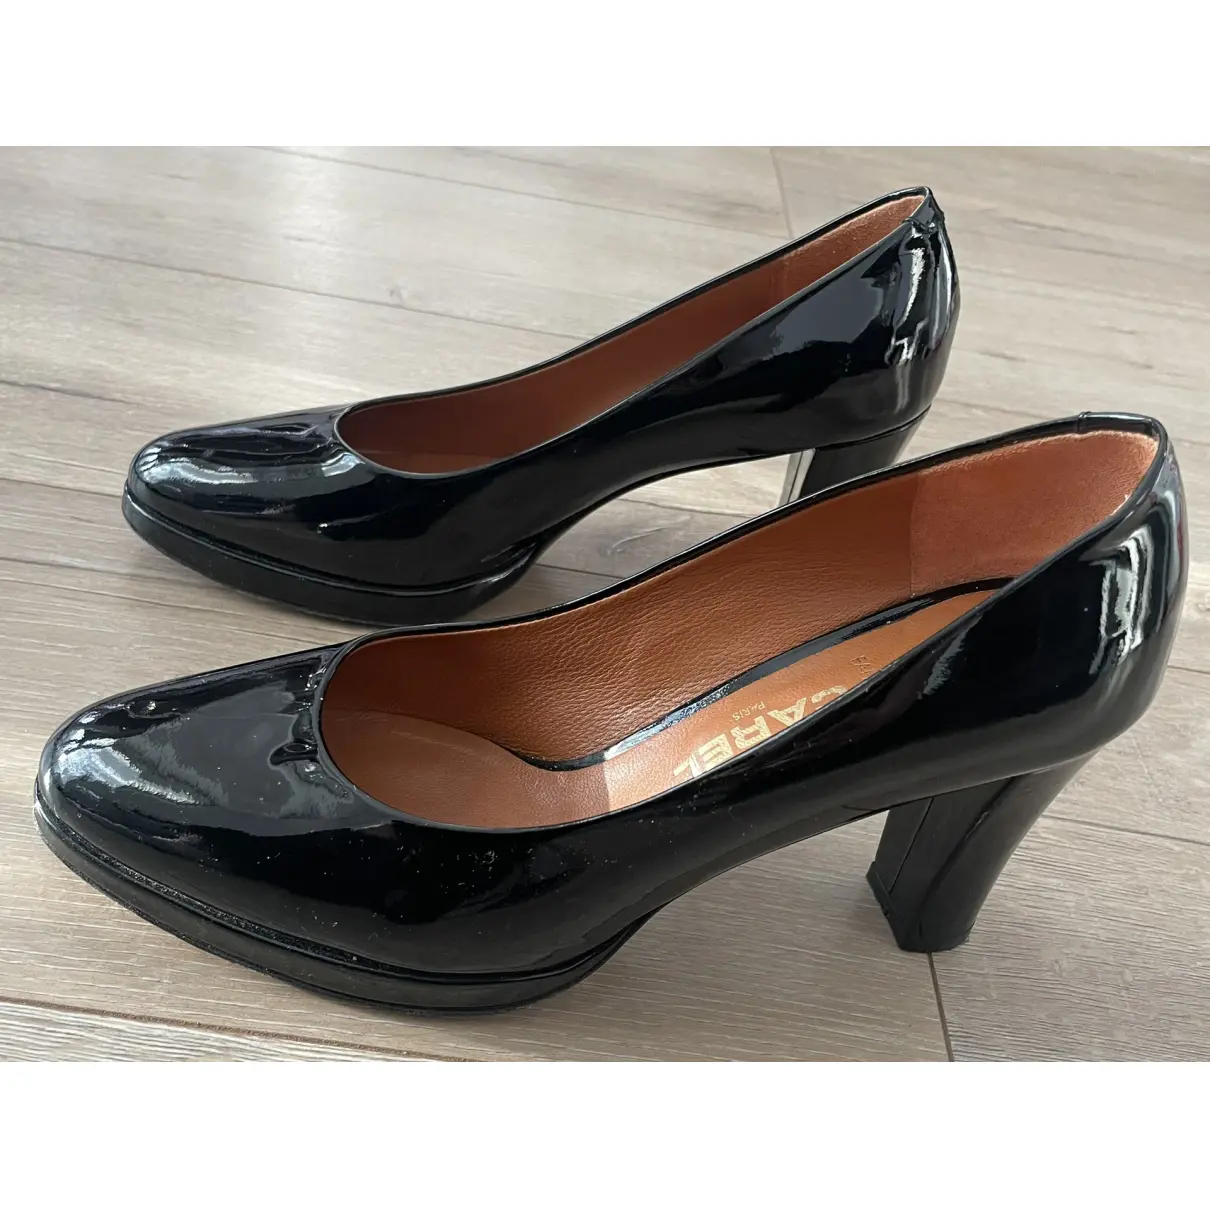 Buy Carel Patent leather heels online